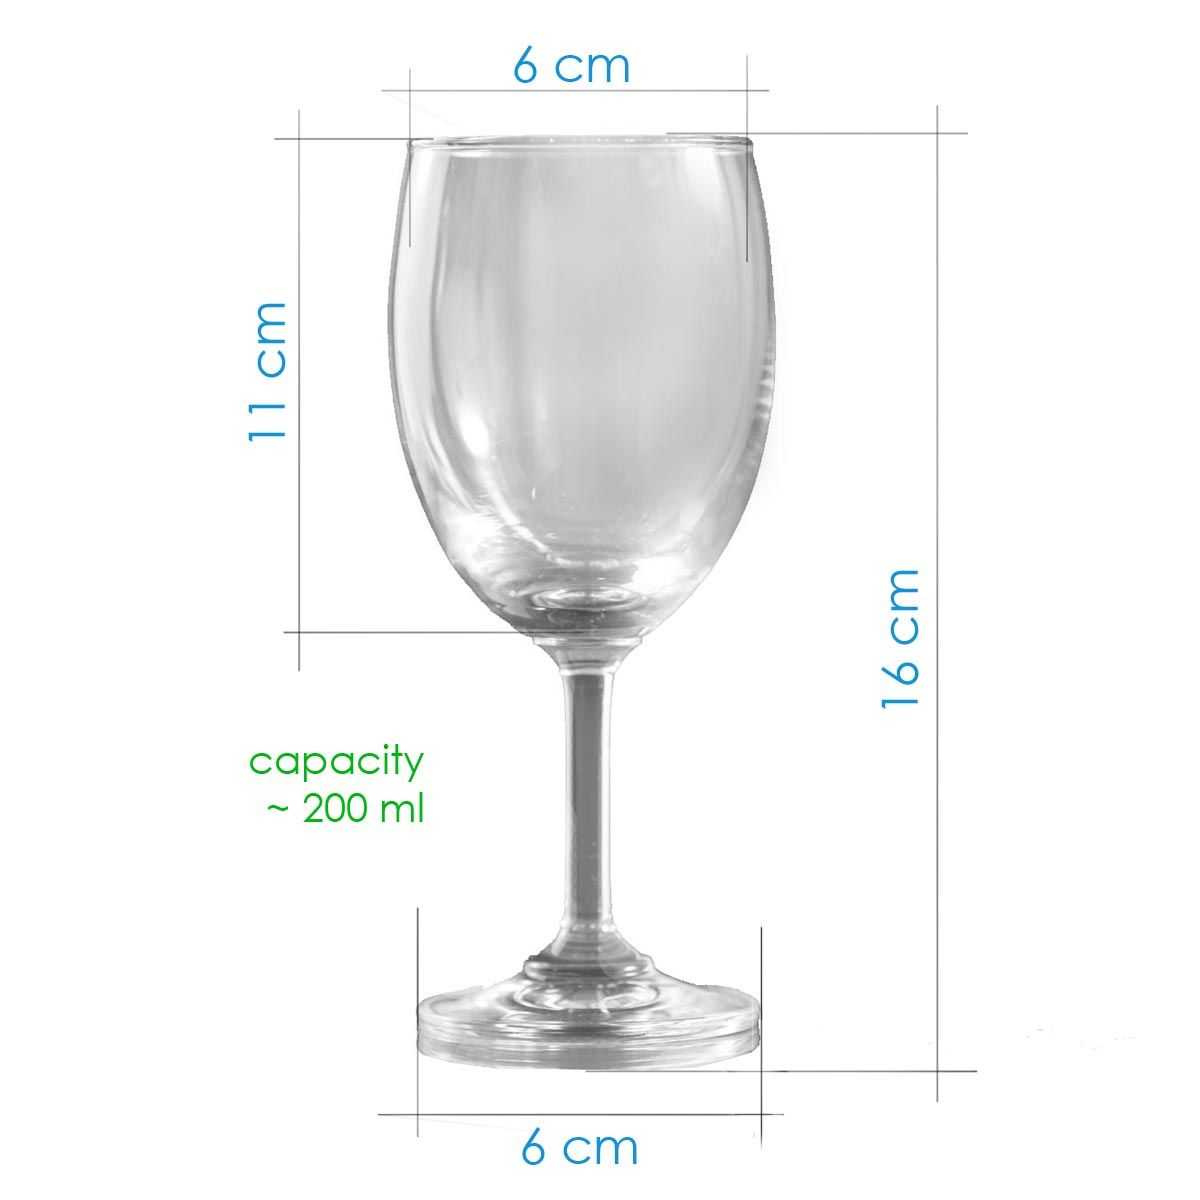 Custom Date Engraved Wine Glasses | Set of 2 - withmuchlove